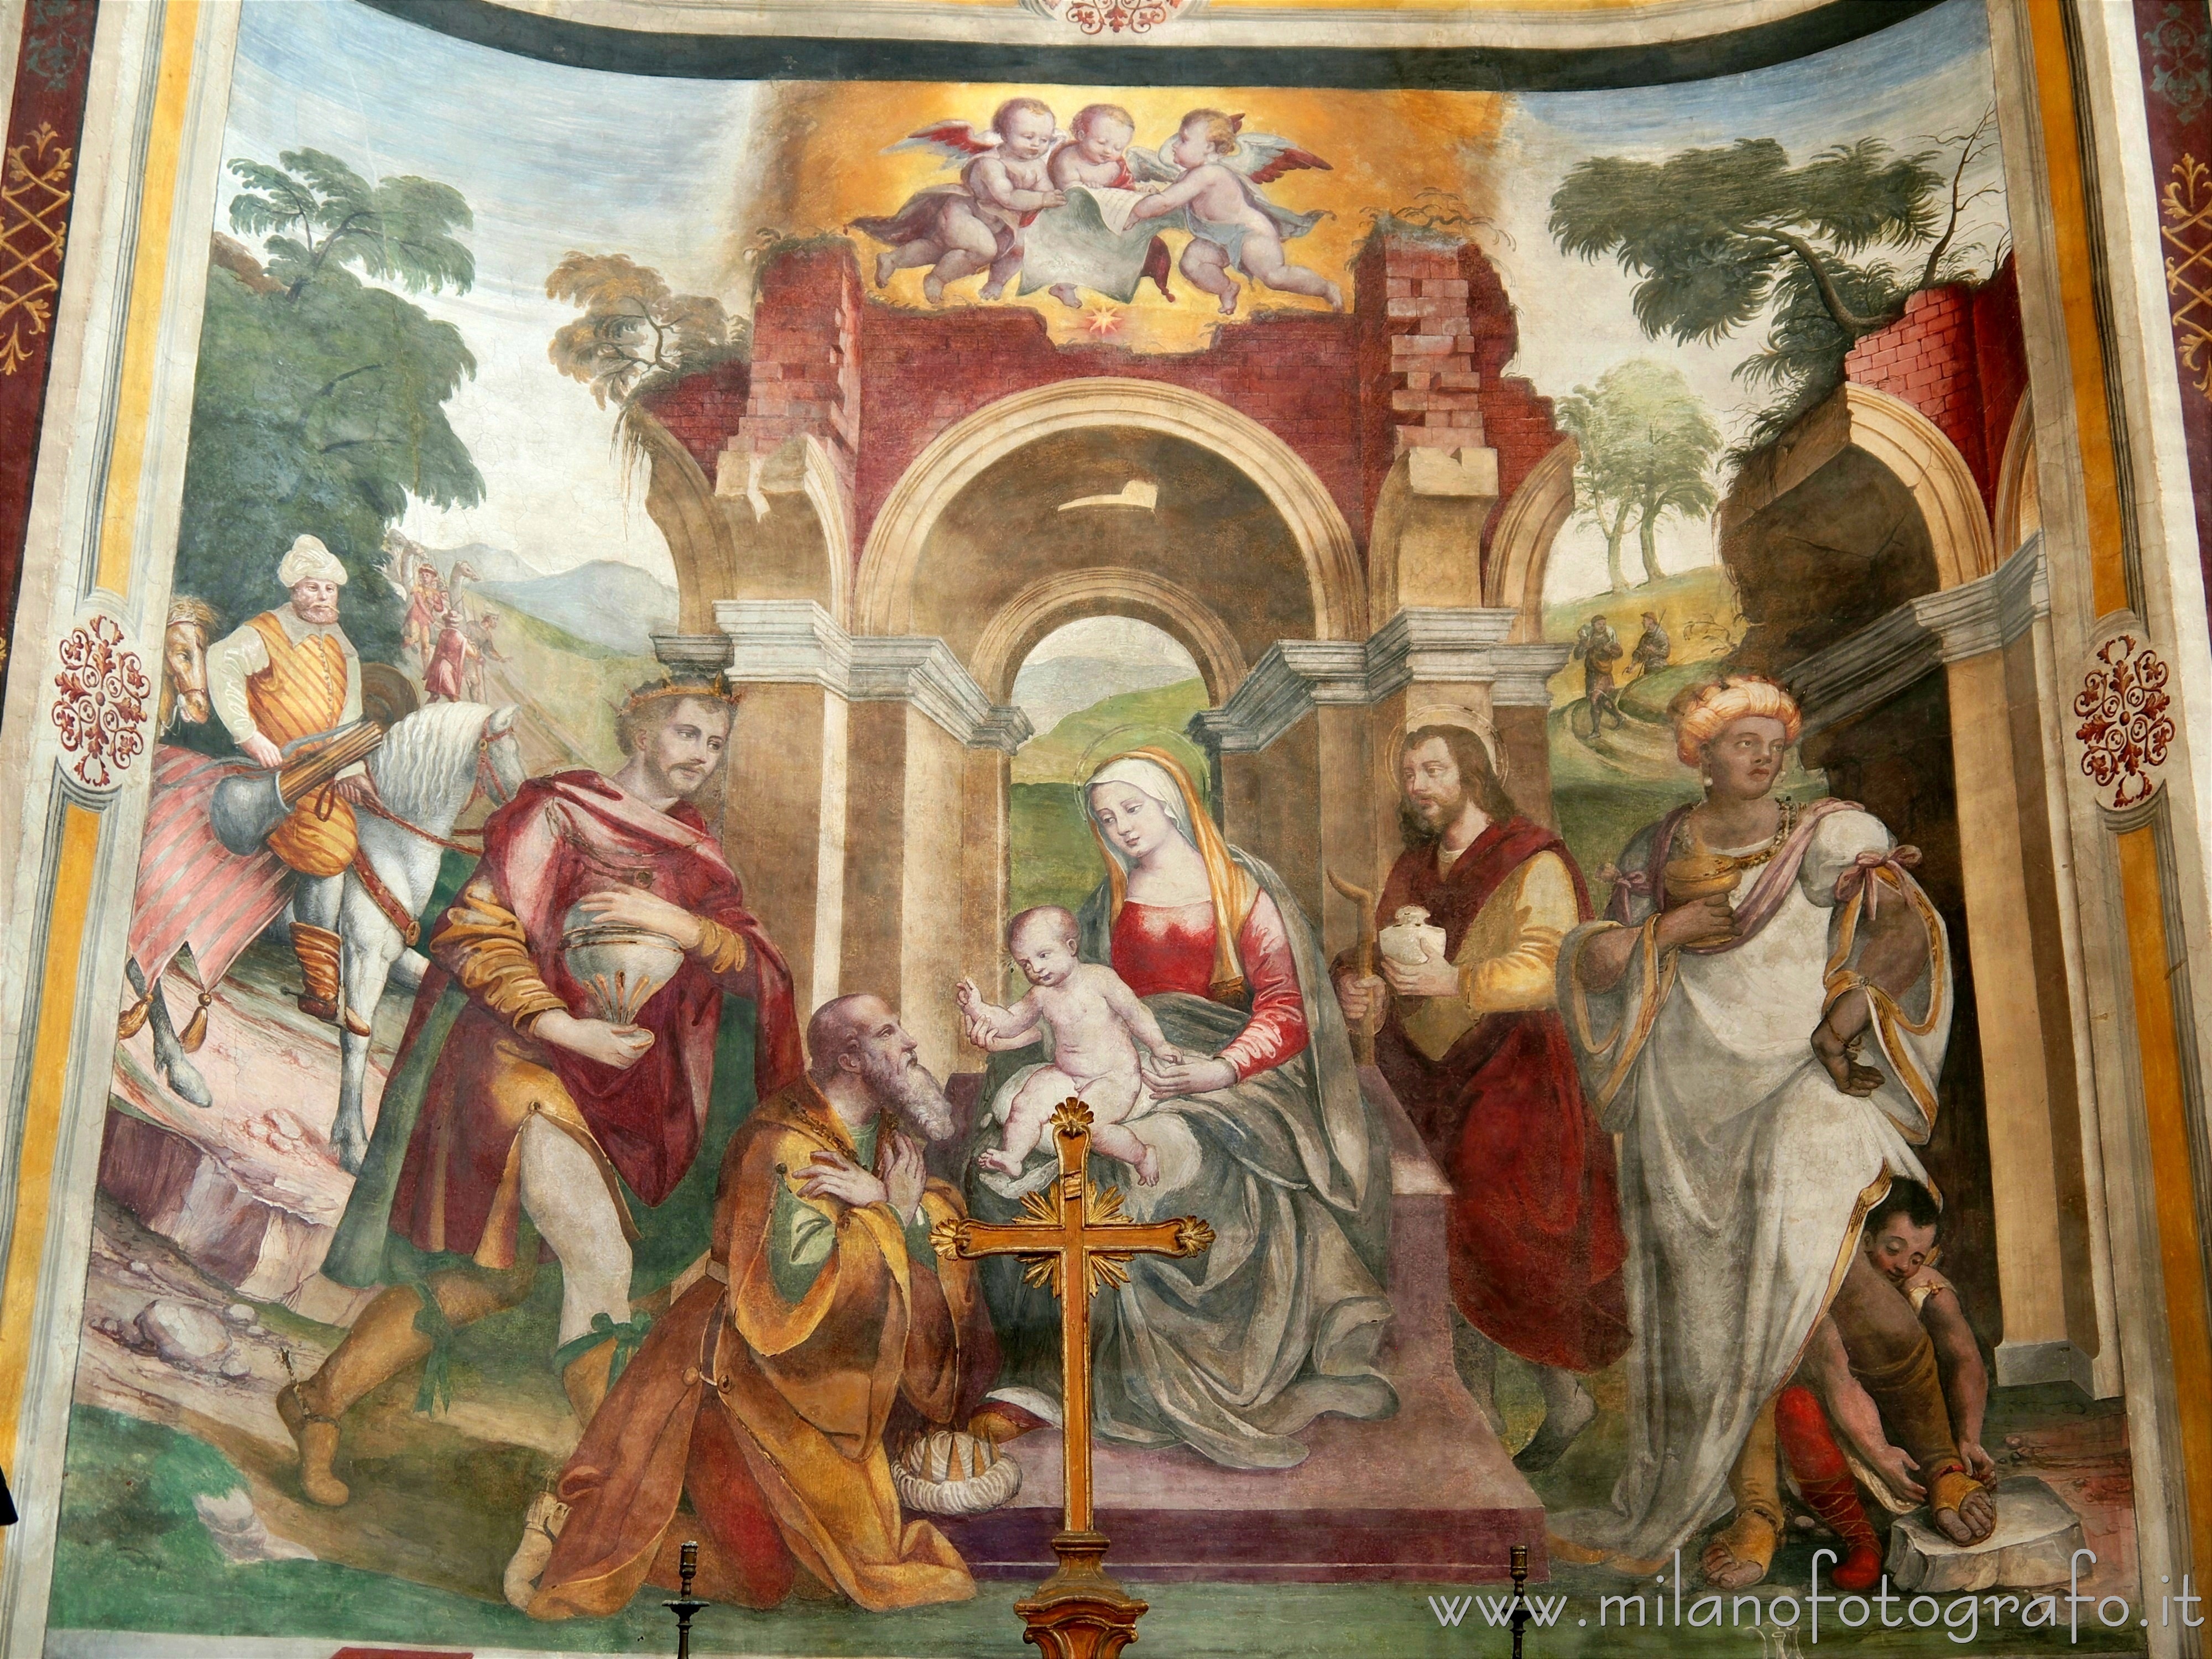 Meda (Monza e Brianza, Italy): Adoration of the Magi in the Church of San Vittore - Meda (Monza e Brianza, Italy)